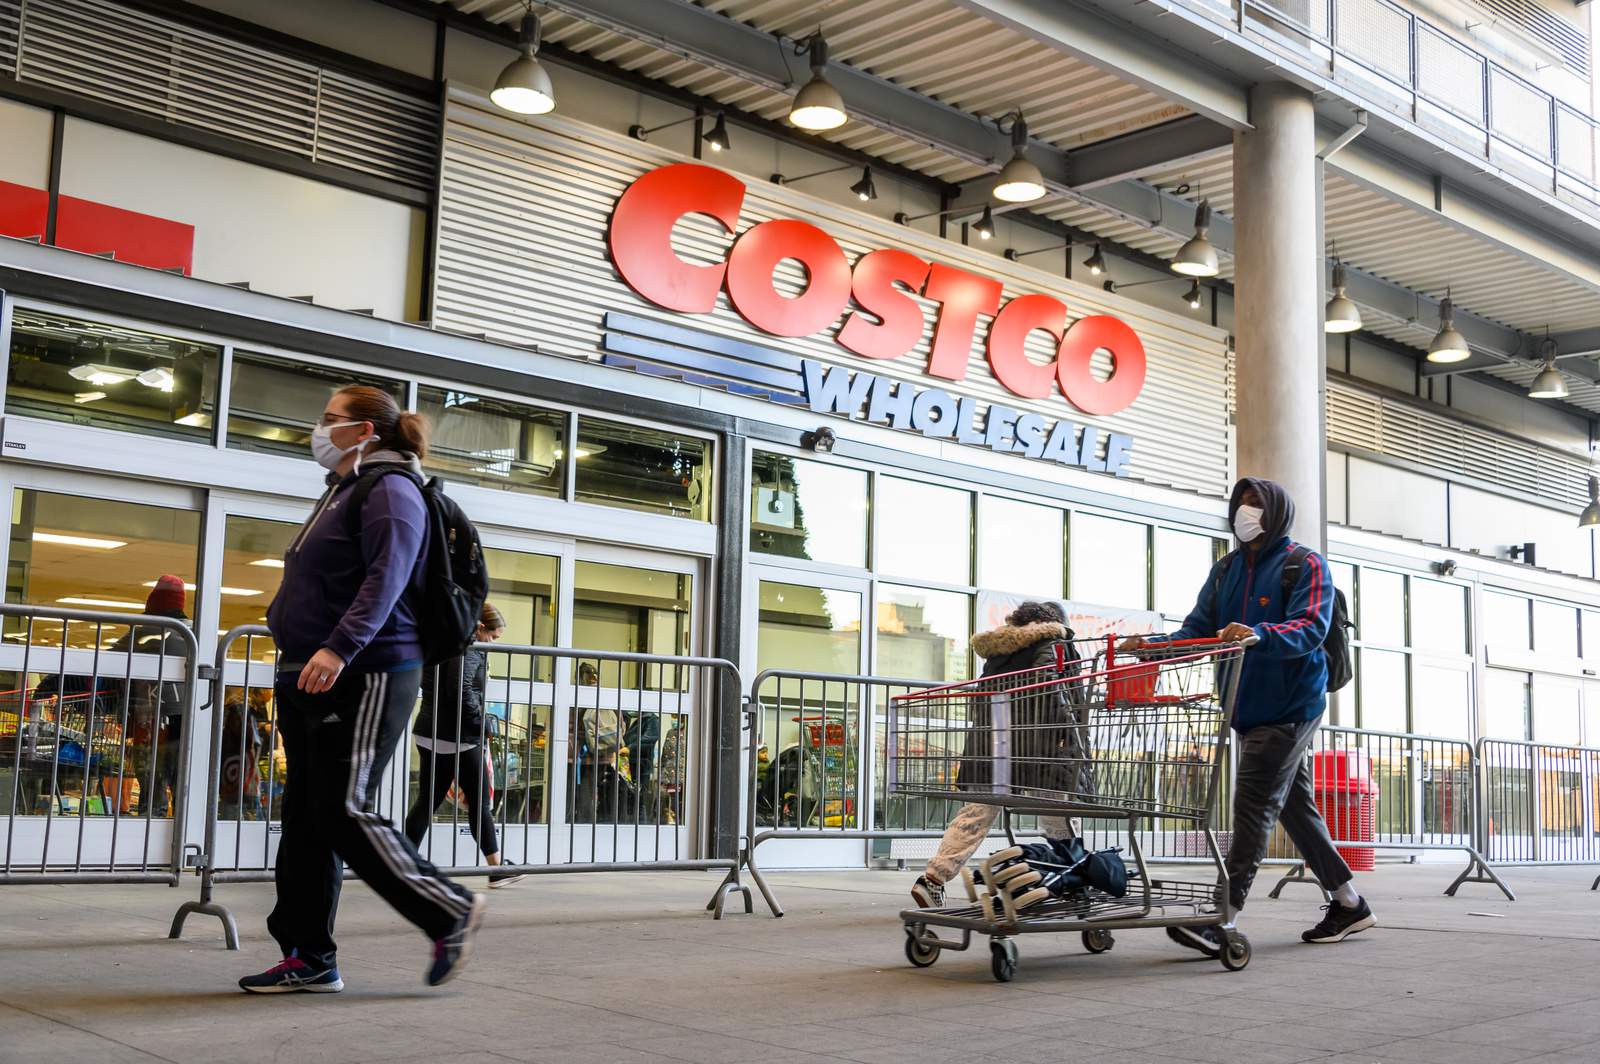 Costco to raise minimum wage to $16 per hour